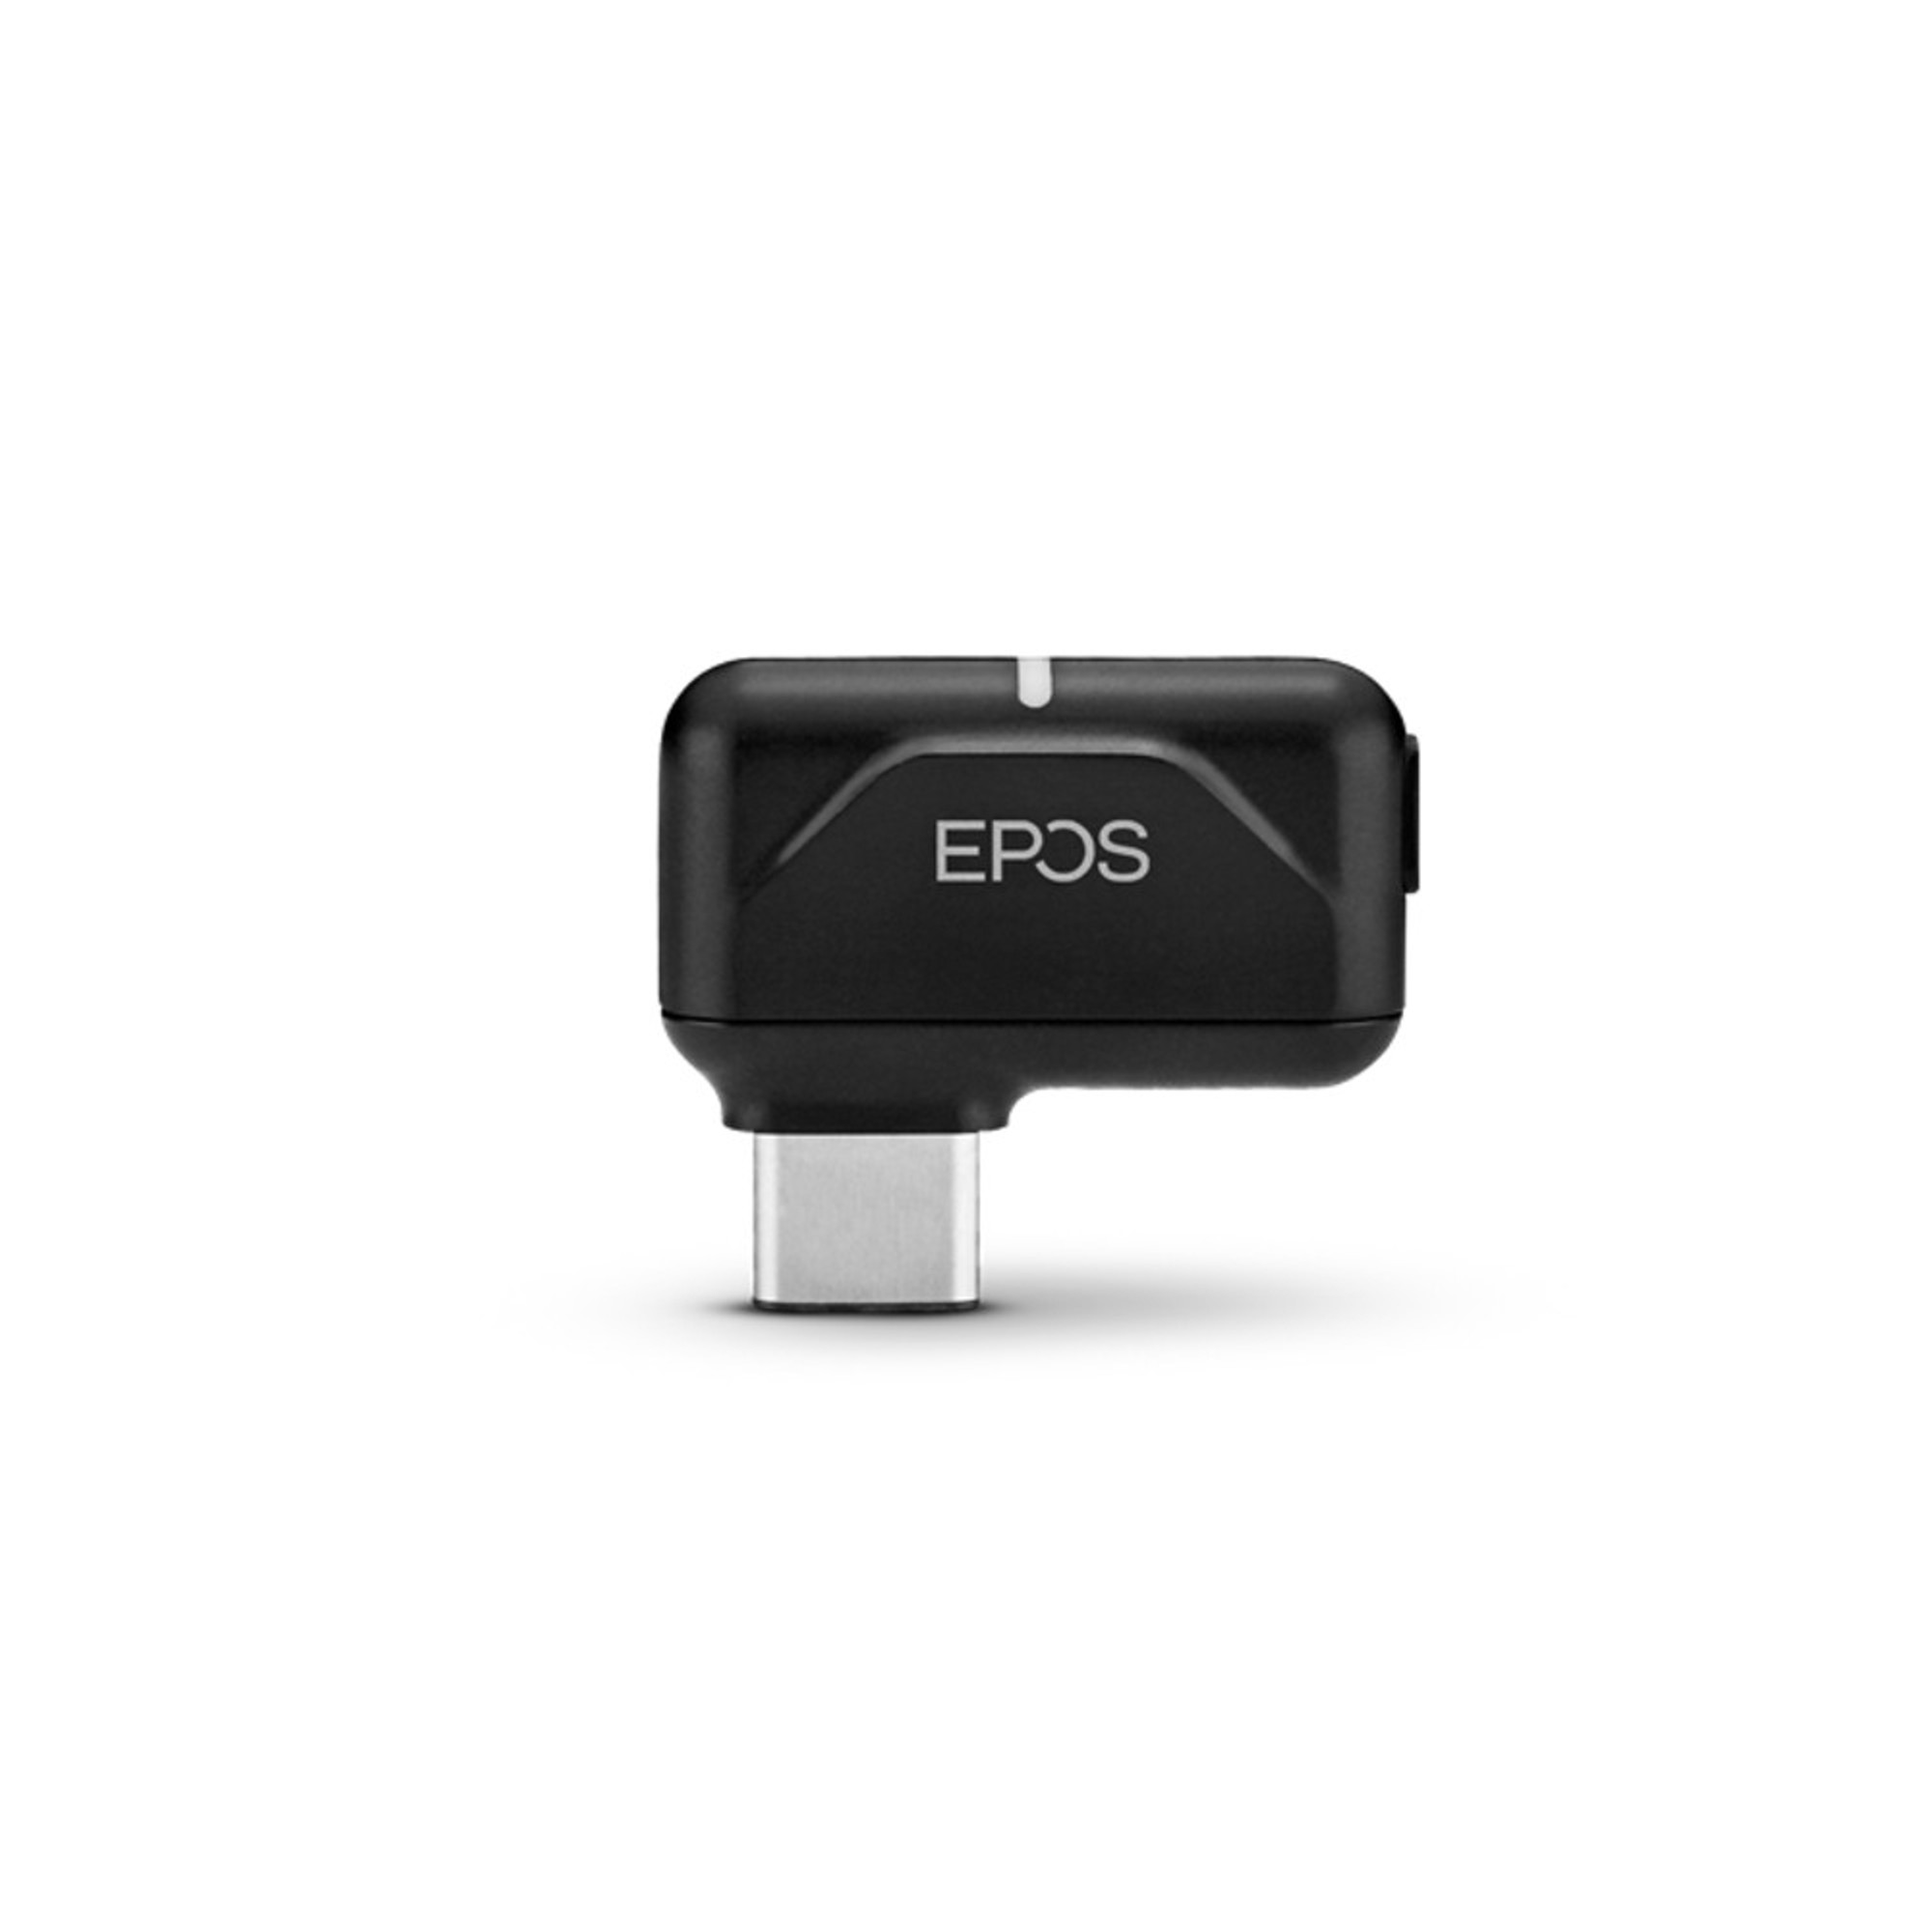 EPOS Sennheiser Headsets | EPOS Sennheiser Bluetooth Dongle | EPOS Sennheiser BTD 800 USB Dongle, USB-C